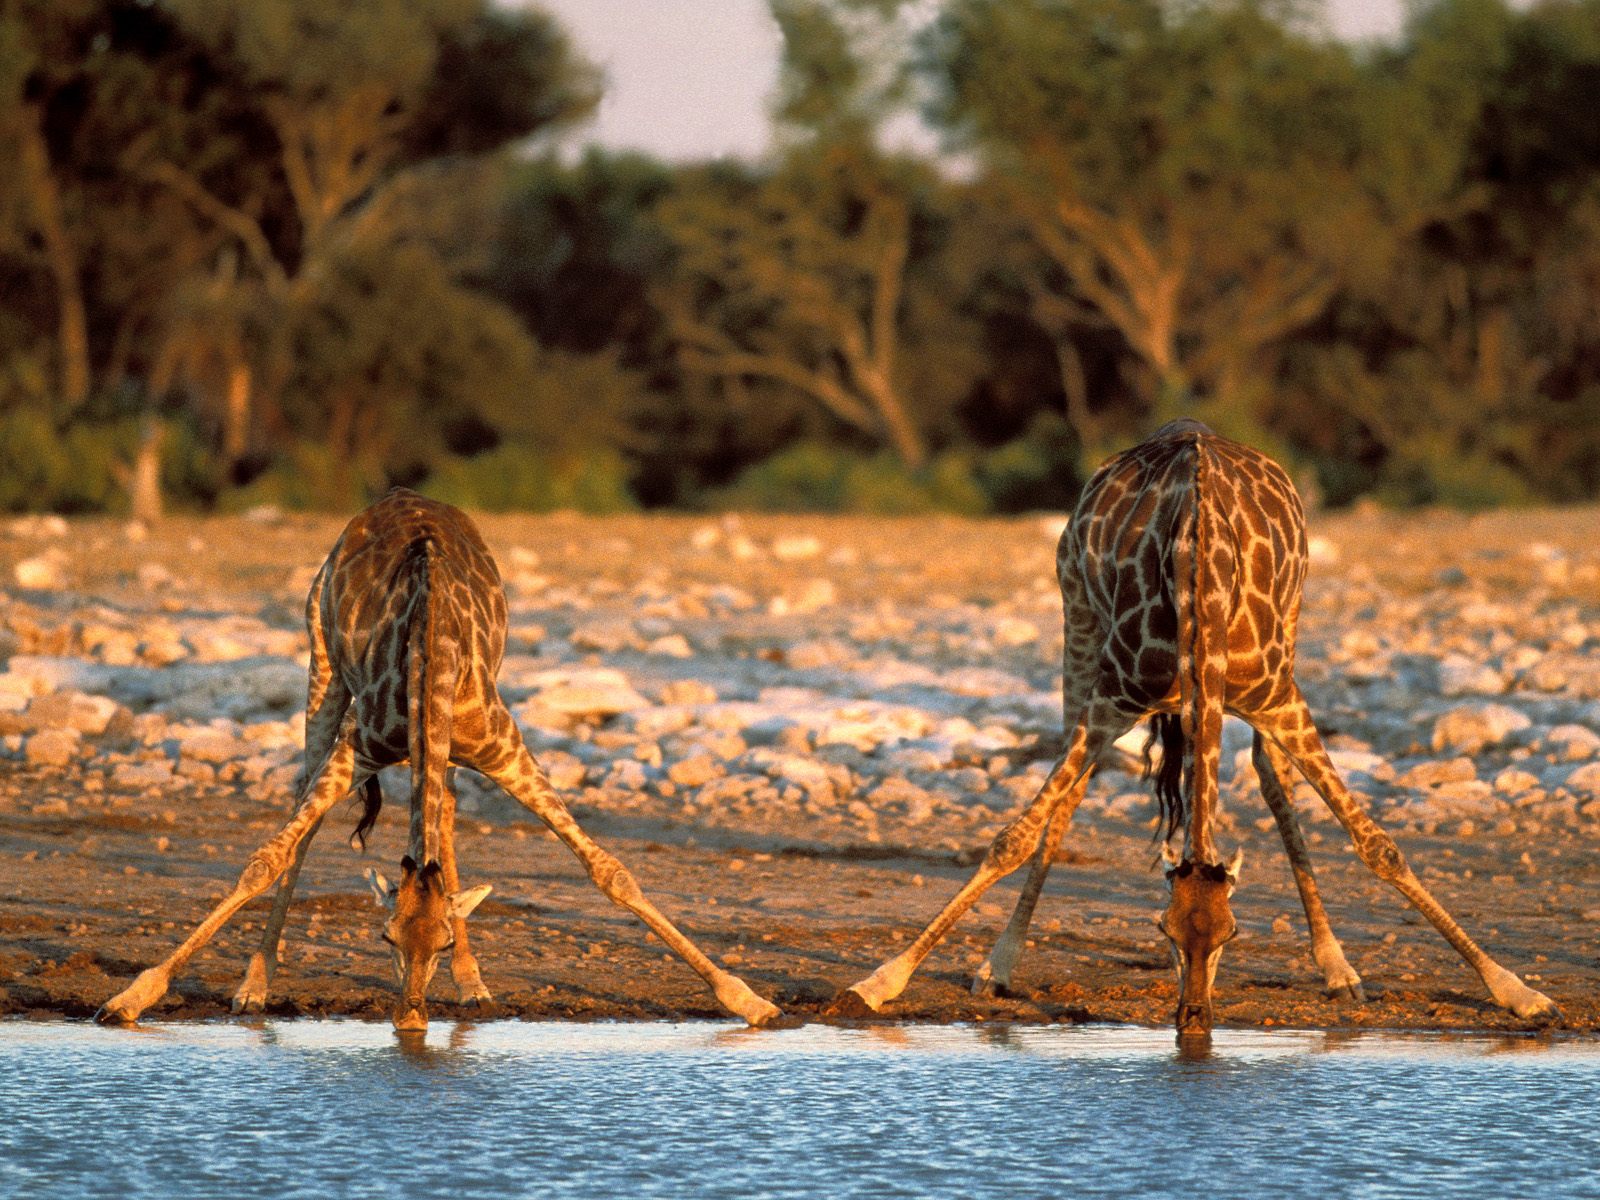 What would happen if giraffes had elastic blood vessels?